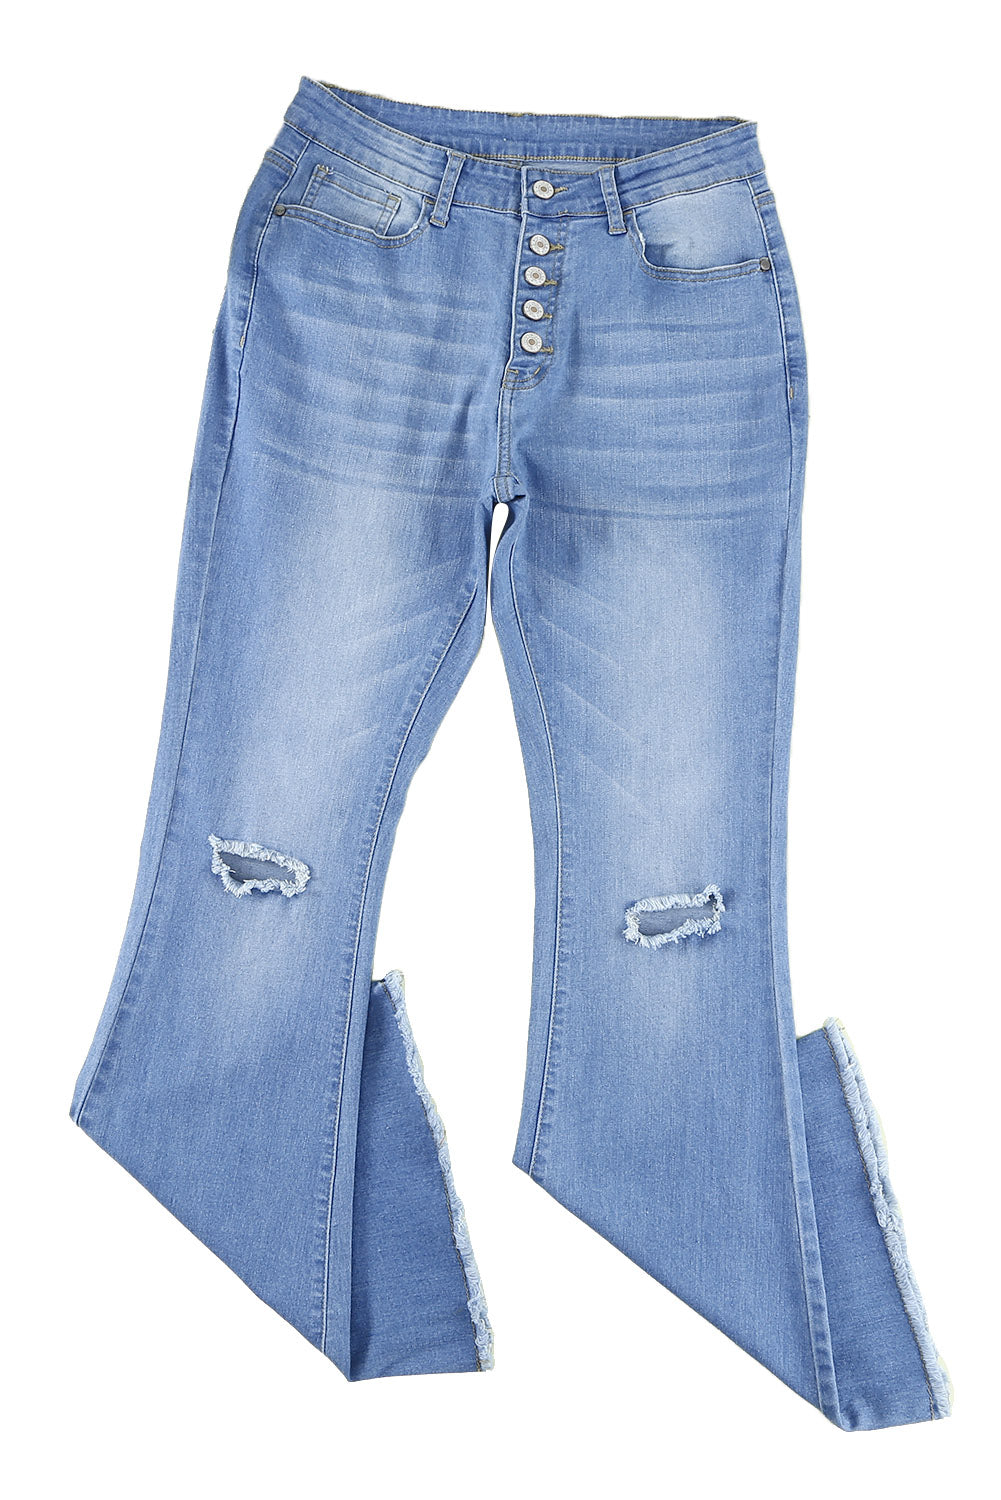 Sky Blue High Rise Distressed Bell Bottom Denims Jeans JT's Designer Fashion